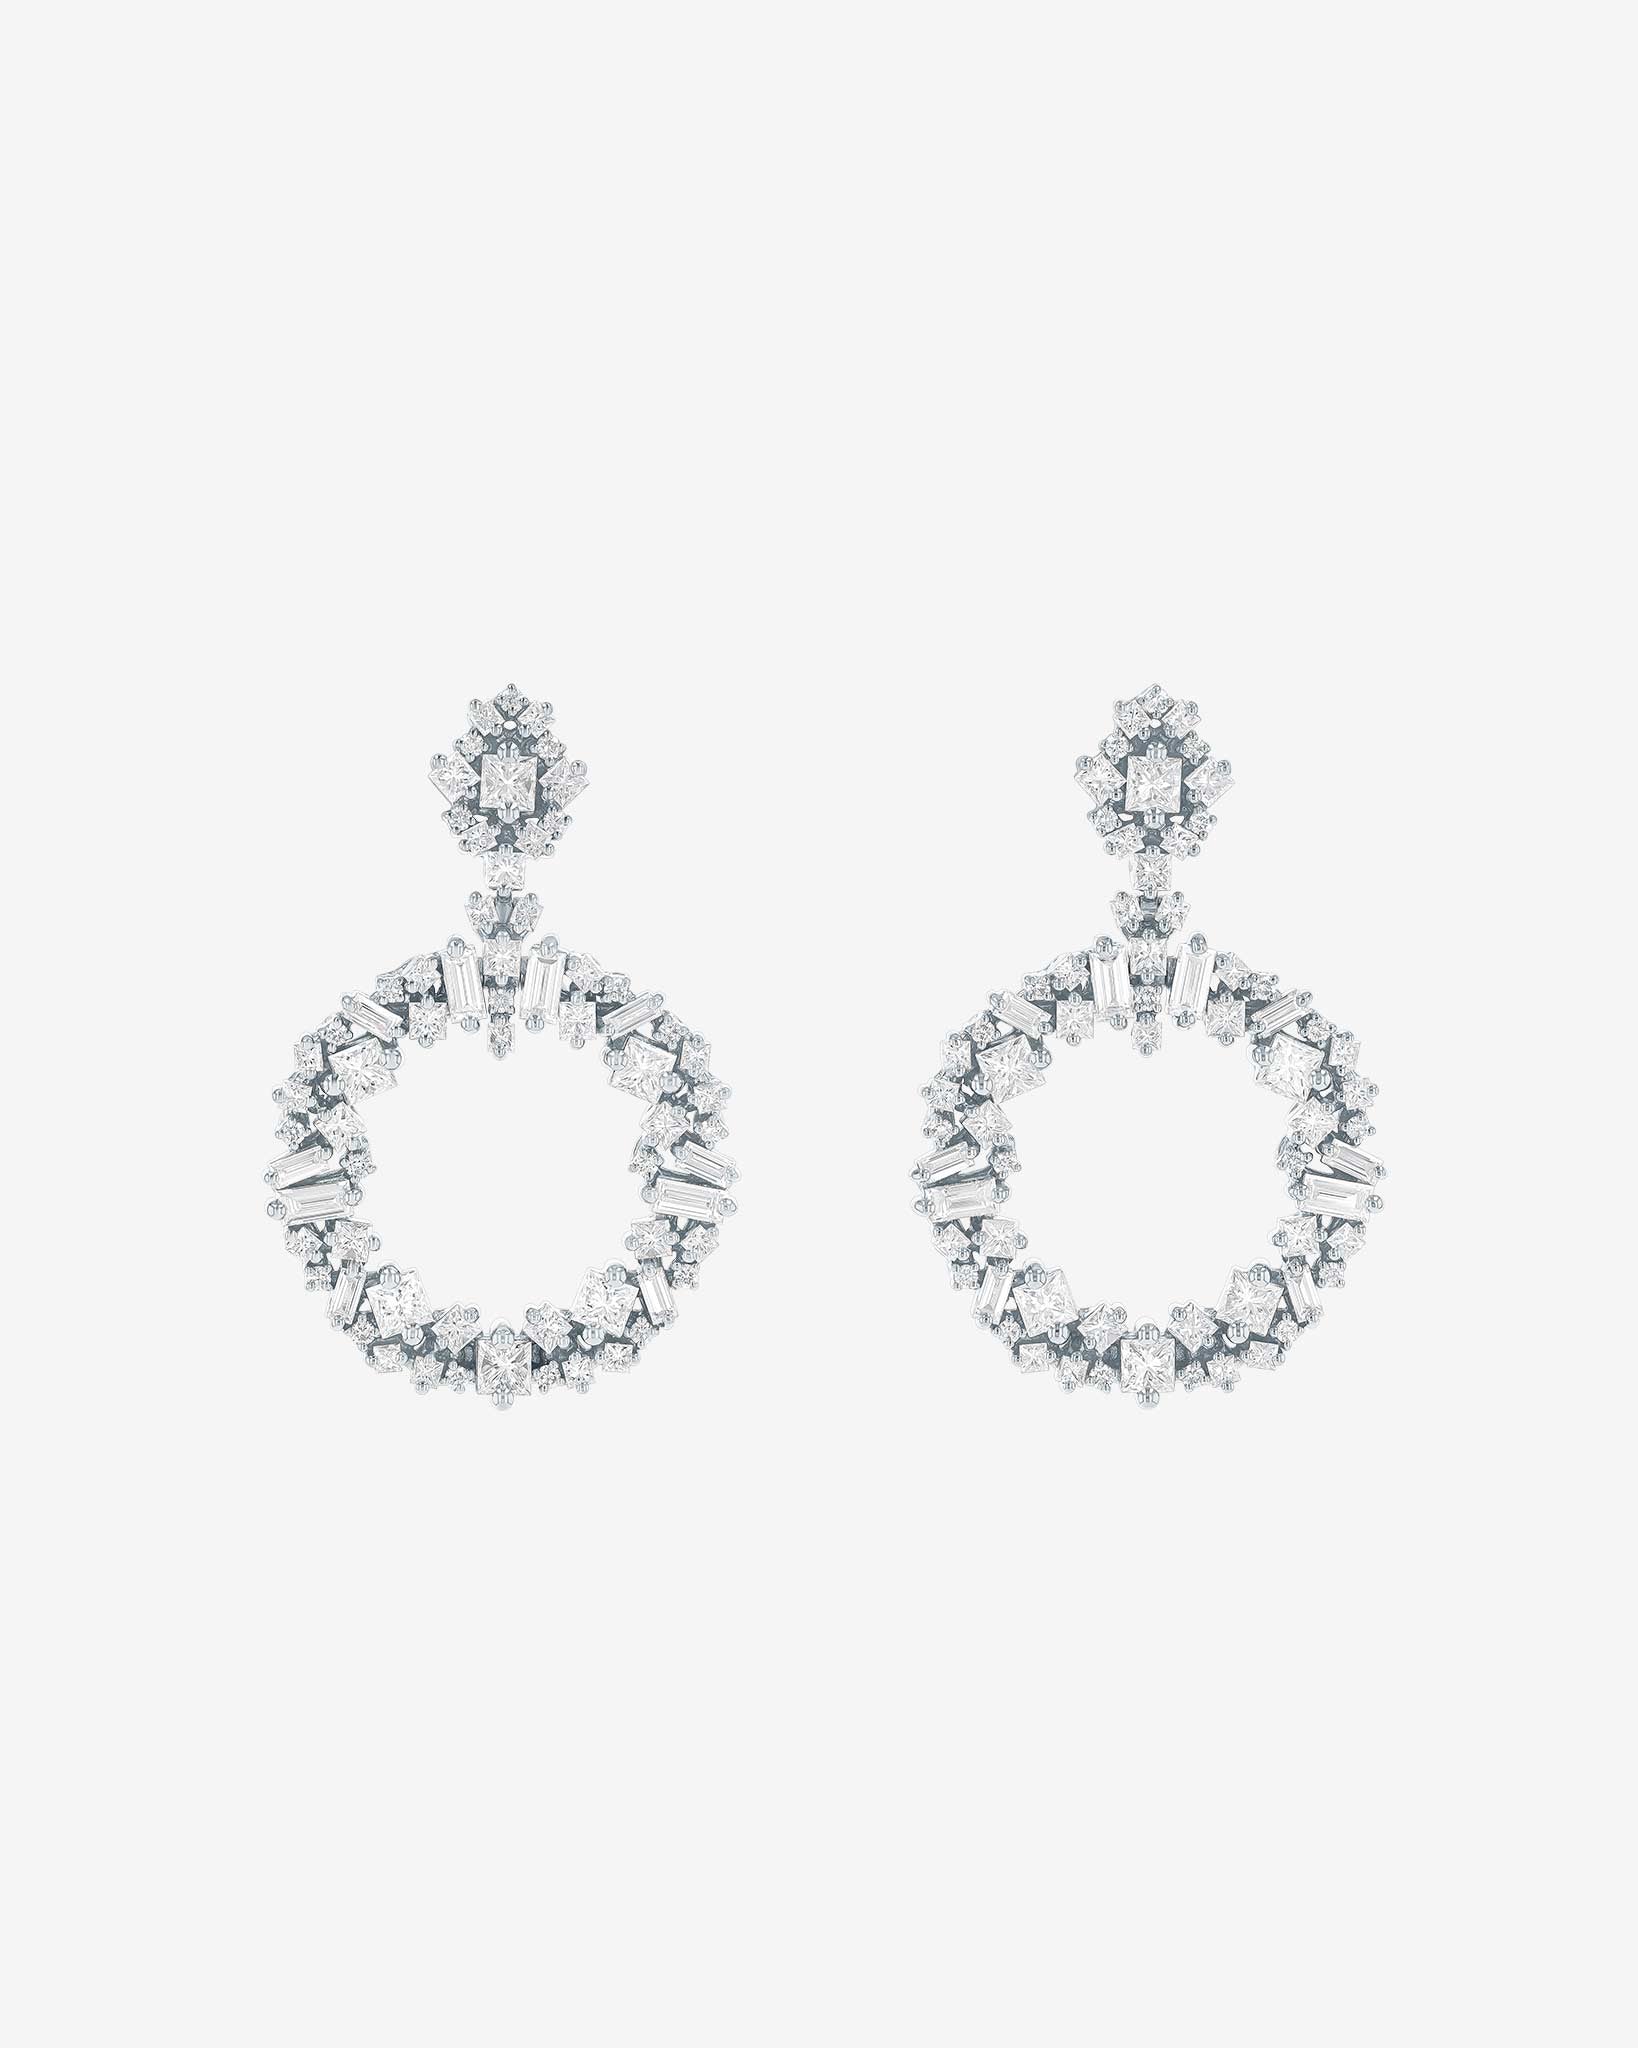 Suzanne Kalan La Fantaisie Eclipse Diamond Drop Earrings in 18k white gold